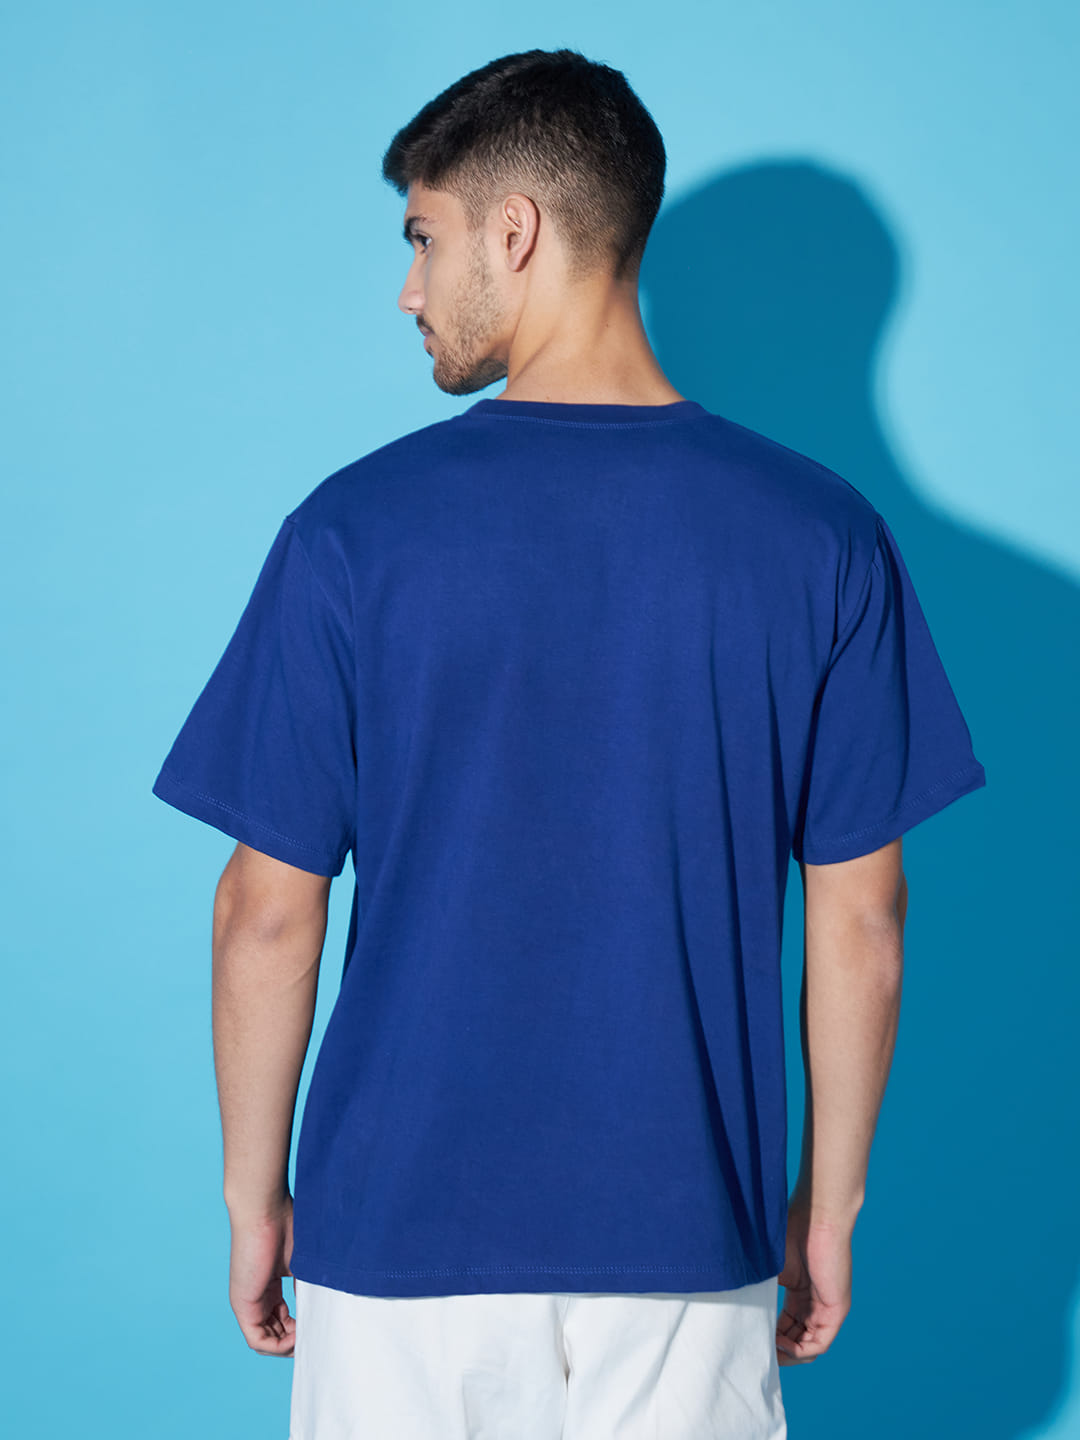 Azure Visions: Blue T-Shirt with Landscape Print